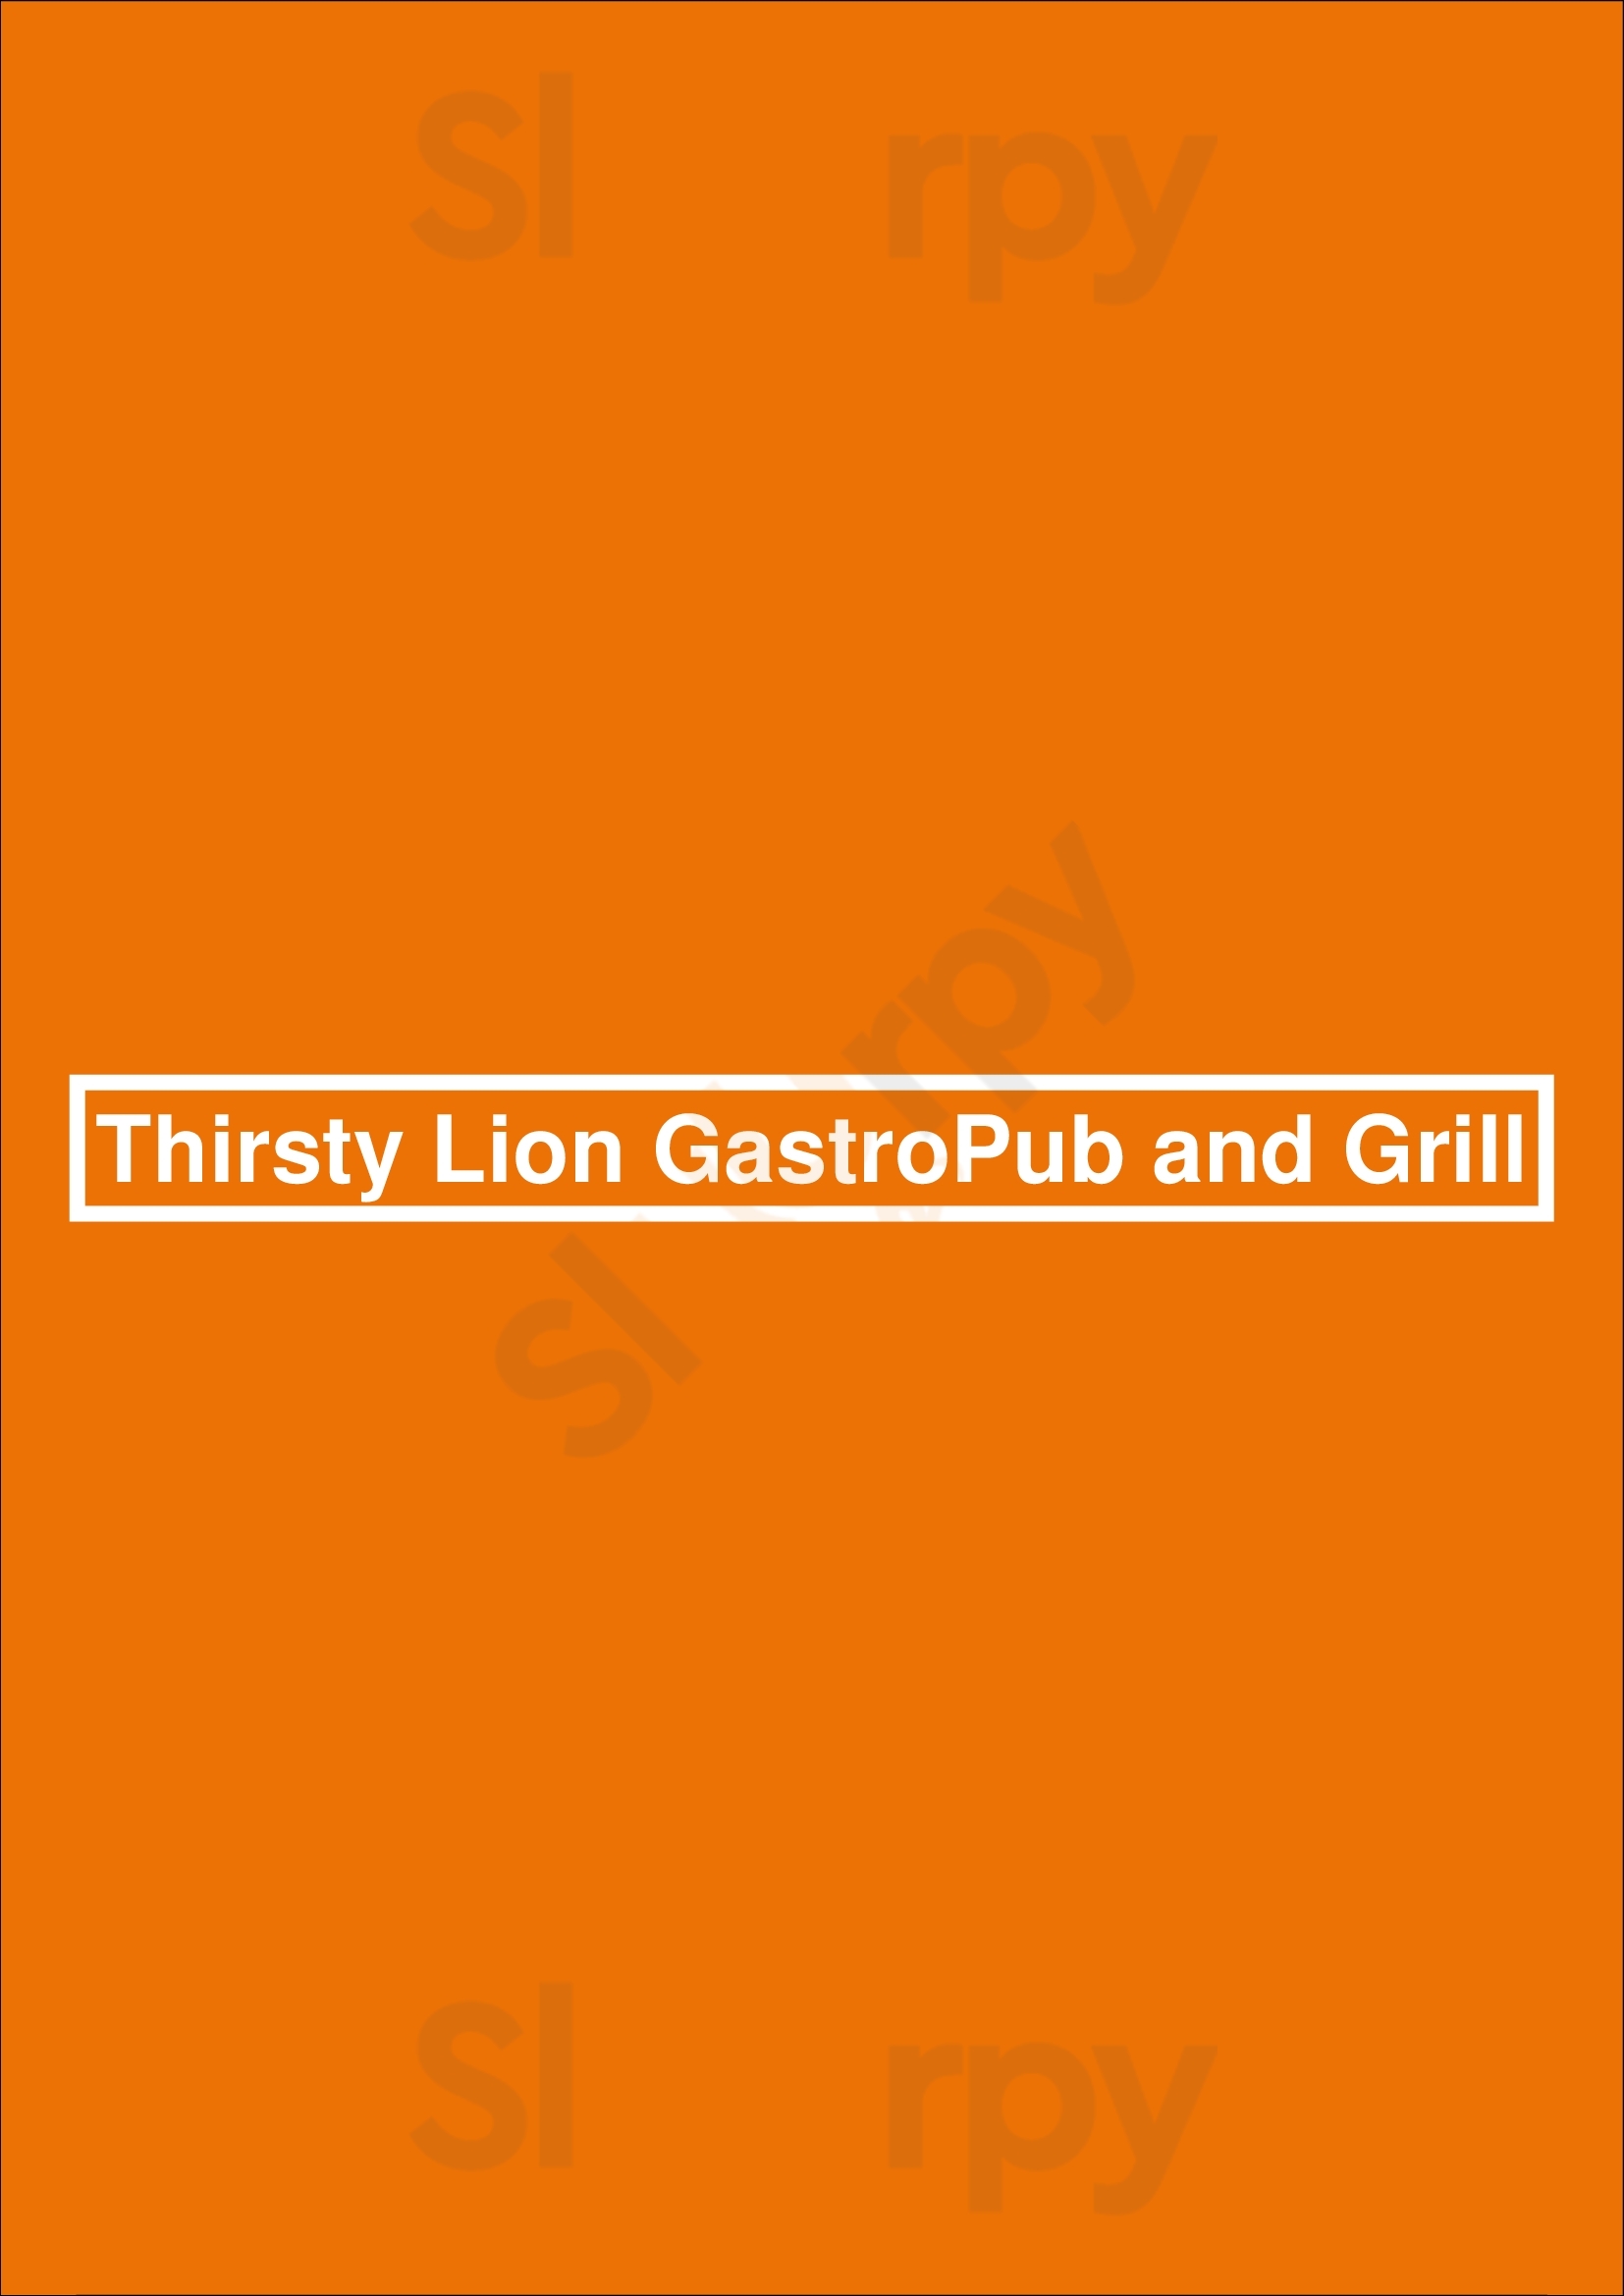 Thirsty Lion Gastropub And Grill Scottsdale Menu - 1